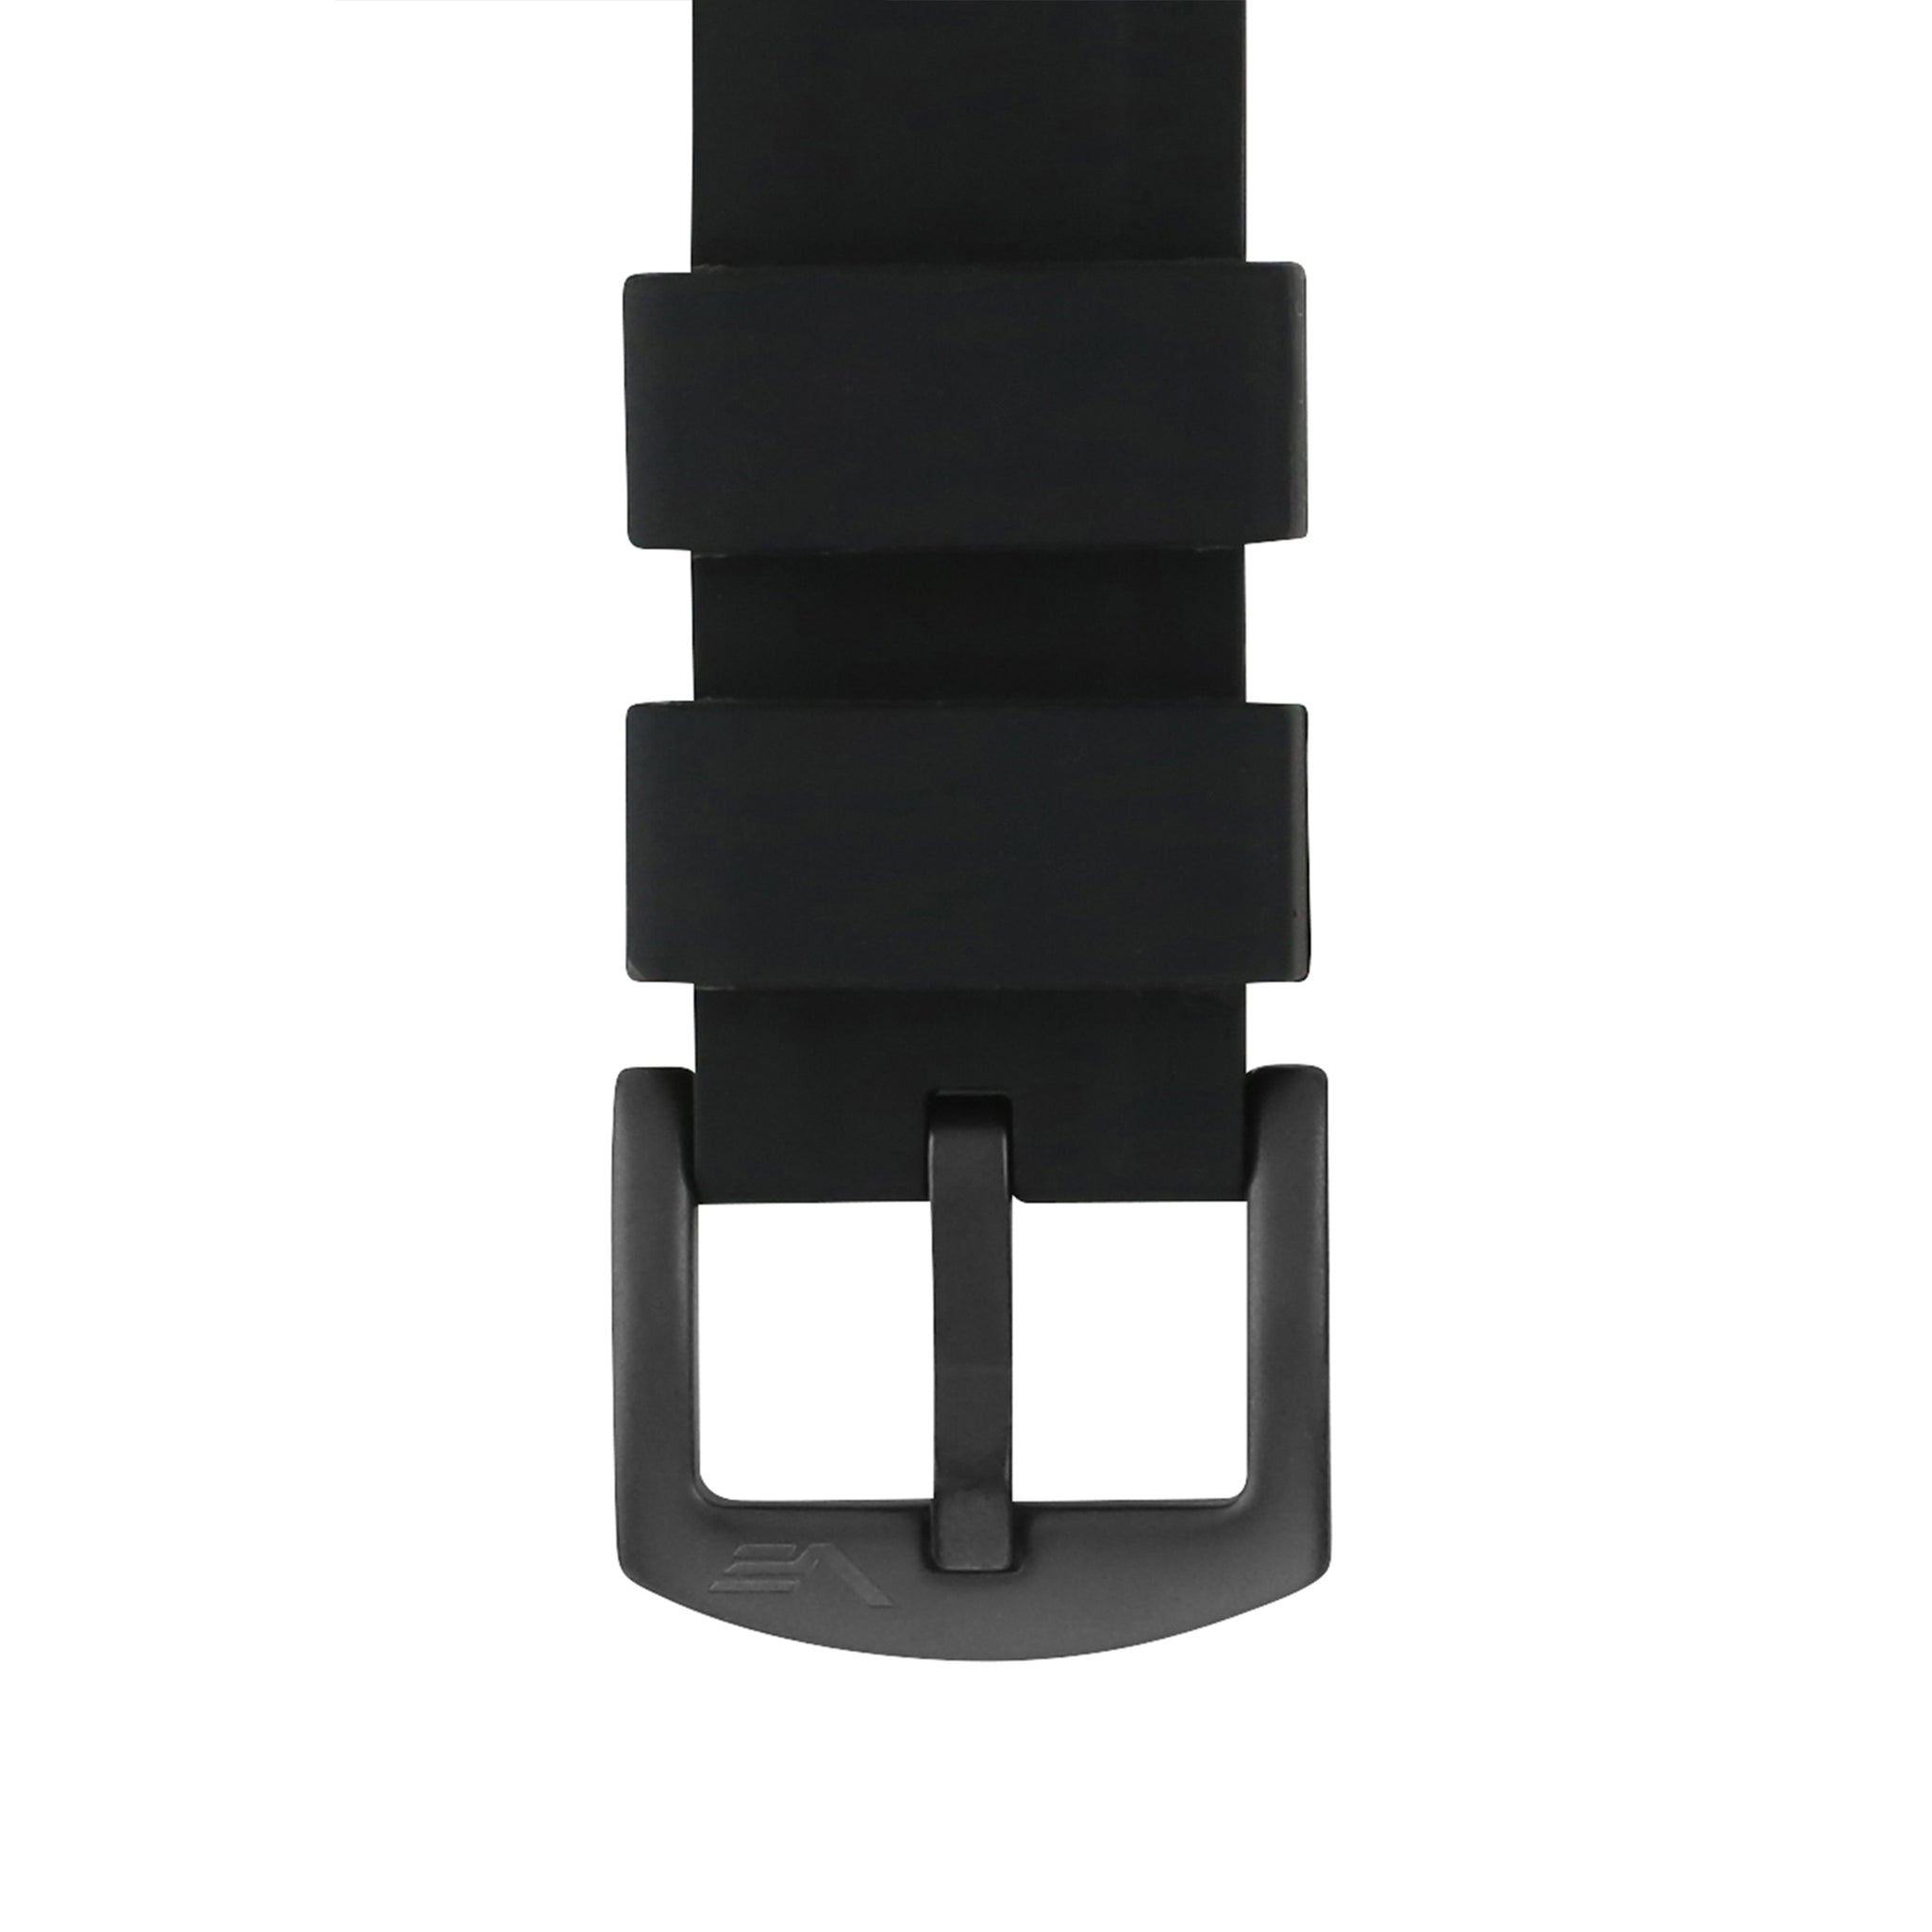 ROCKET N1 BLACK SILICONE STRAP 22mm - BLACK BUCKLE